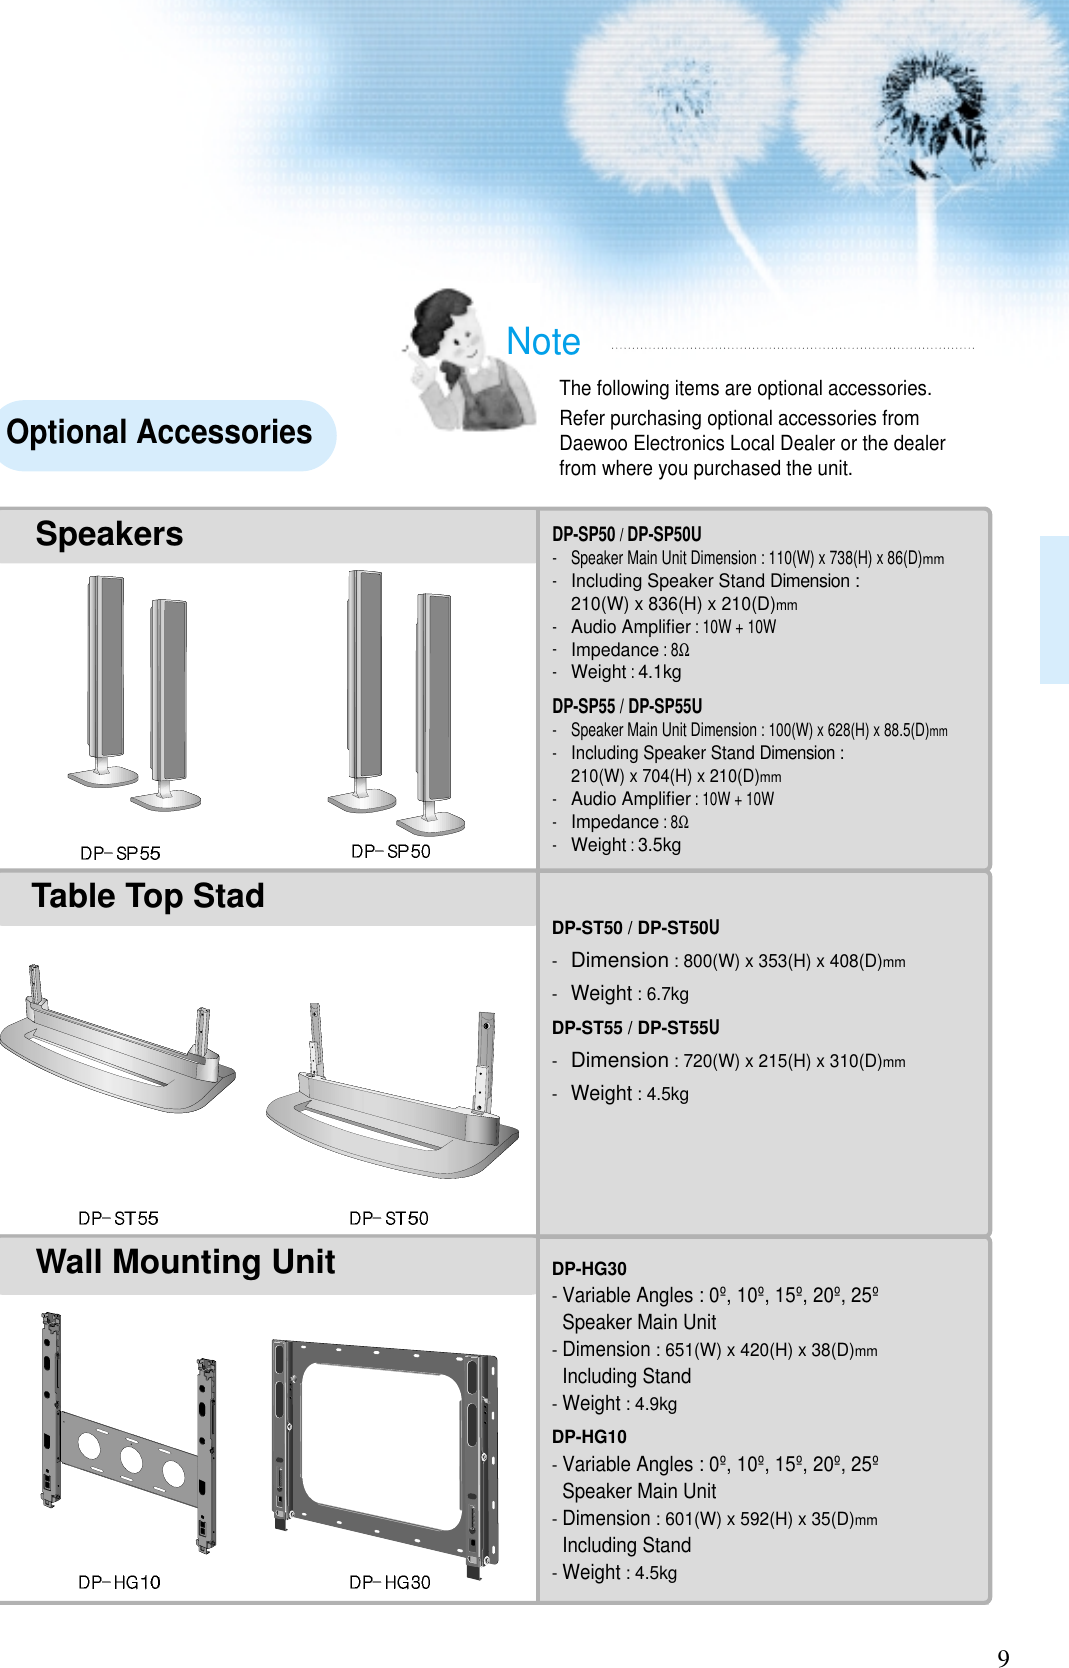 9NoteThe following items are optional accessories.Refer purchasing optional accessories fromDaewoo Electronics Local Dealer or the dealerfrom where you purchased the unit. Optional AccessoriesTable Top StadSpeakersDP-SP50 / DP-SP50U- Speaker Main Unit Dimension : 110(W) x 738(H) x 86(D)mm-Including Speaker Stand Dimension : 210(W) x 836(H) x 210(D)mm-Audio Ampliﬁer: 10W + 10W-Impedance: 8Ω-Weight: 4.1kgDP-SP55 / DP-SP55U-Speaker Main Unit Dimension : 100(W) x 628(H) x 88.5(D)mm-Including Speaker Stand Dimension: 210(W) x 704(H) x 210(D)mm-Audio Ampliﬁer: 10W + 10W-Impedance: 8Ω-Weight: 3.5kgDP-ST50 / DP-ST50U-Dimension: 800(W) x 353(H) x 408(D)mm-Weight: 6.7kgDP-ST55 / DP-ST55U-Dimension: 720(W) x 215(H) x 310(D)mm-Weight: 4.5kgWall Mounting UnitDP-HG30 - Variable Angles : 0º, 10º, 15º, 20º, 25ºSpeaker Main Unit- Dimension: 651(W) x 420(H) x 38(D)mmIncluding Stand- Weight: 4.9kgDP-HG10 - Variable Angles : 0º, 10º, 15º, 20º, 25ºSpeaker Main Unit- Dimension: 601(W) x 592(H) x 35(D)mmIncluding Stand- Weight: 4.5kg